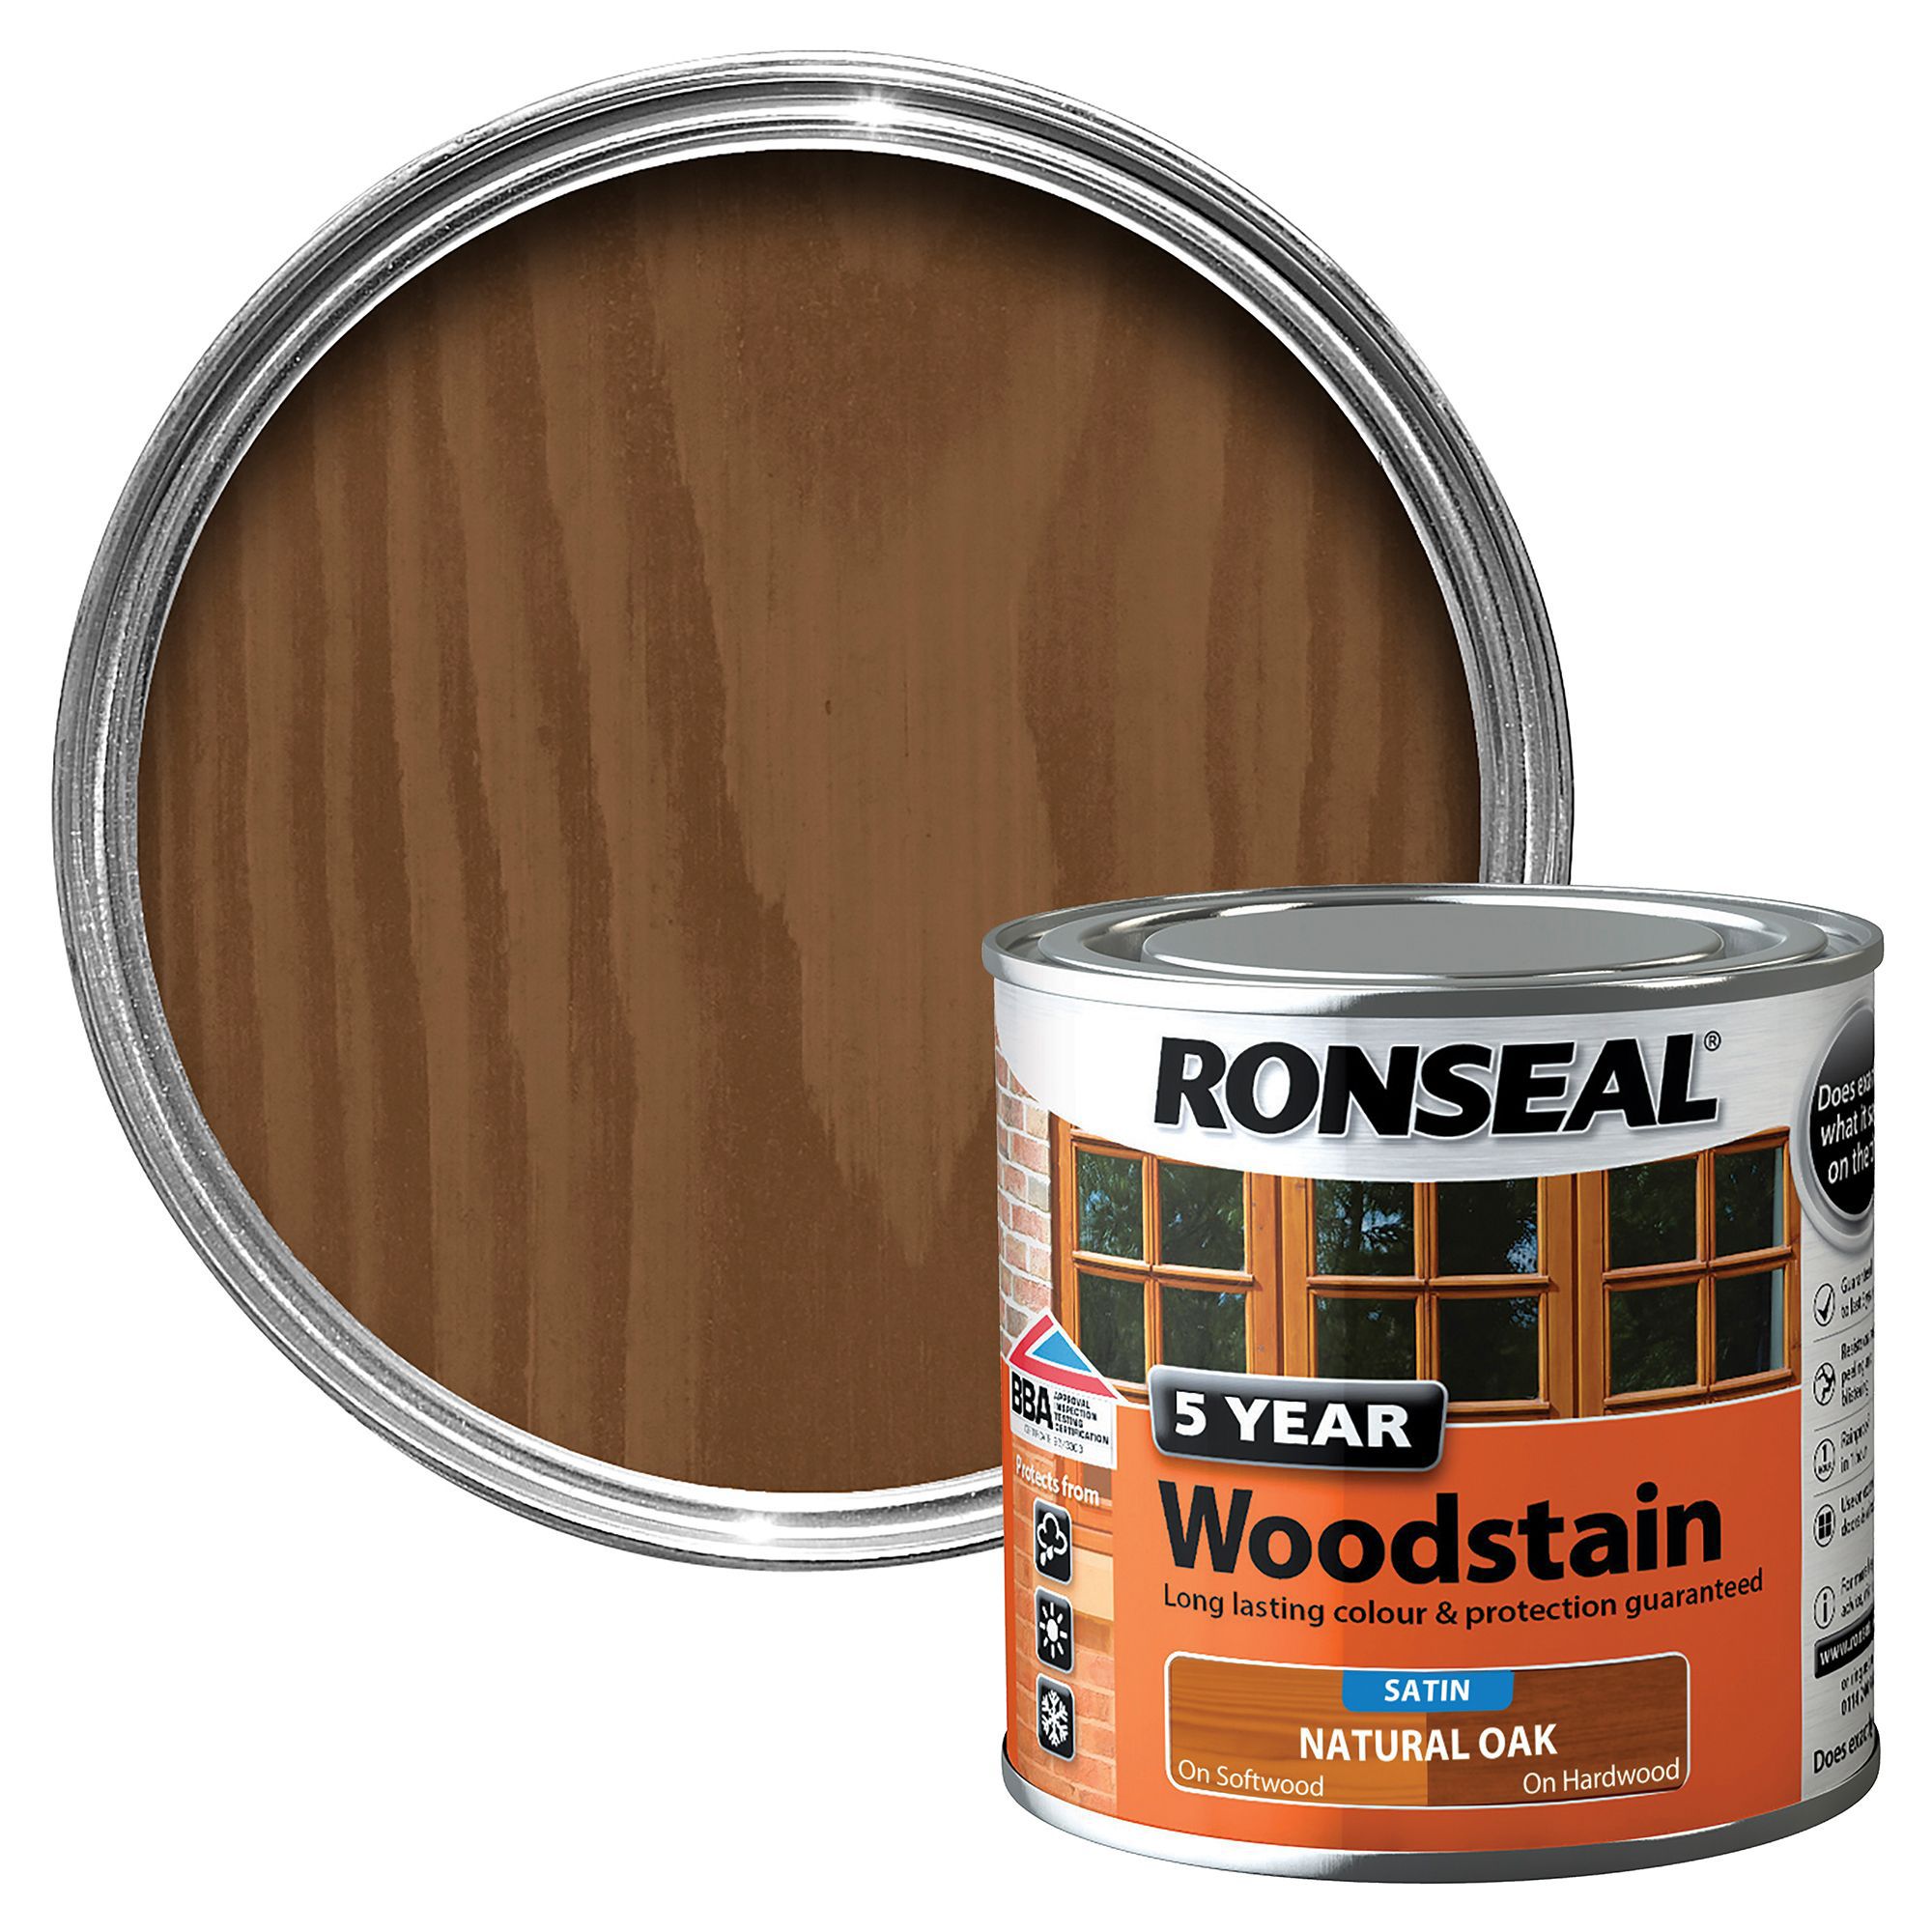 Ronseal Natural oak High satin sheen Wood stain, 250